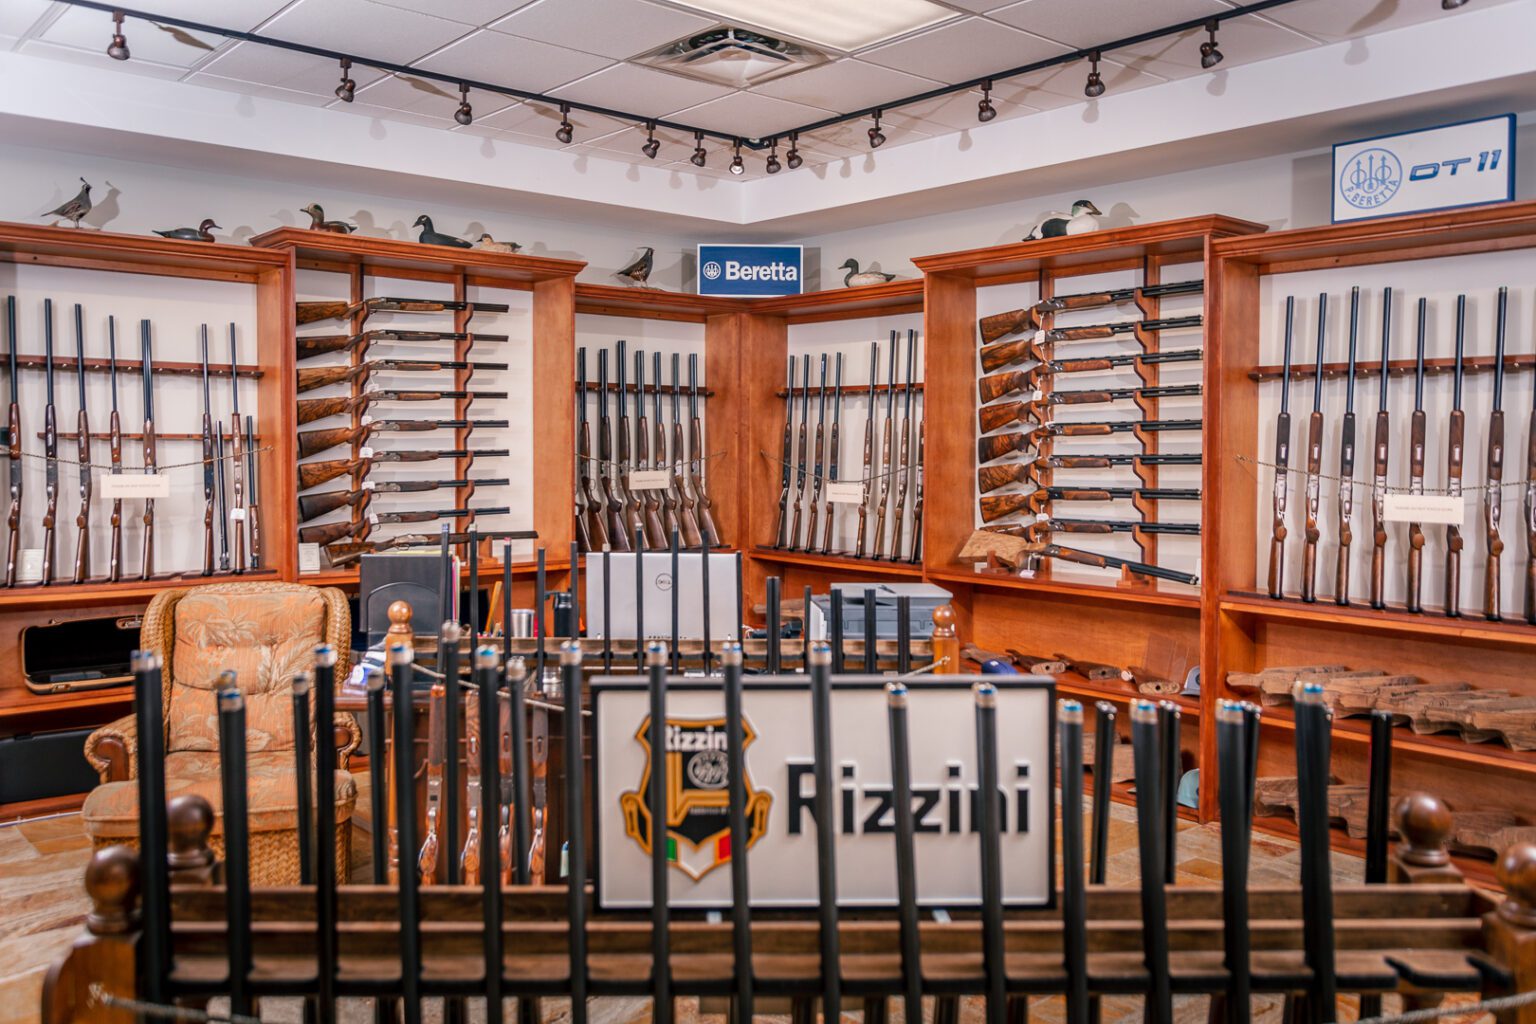 image of Rizzini shotguns in the Cole Gunsmithing showroom